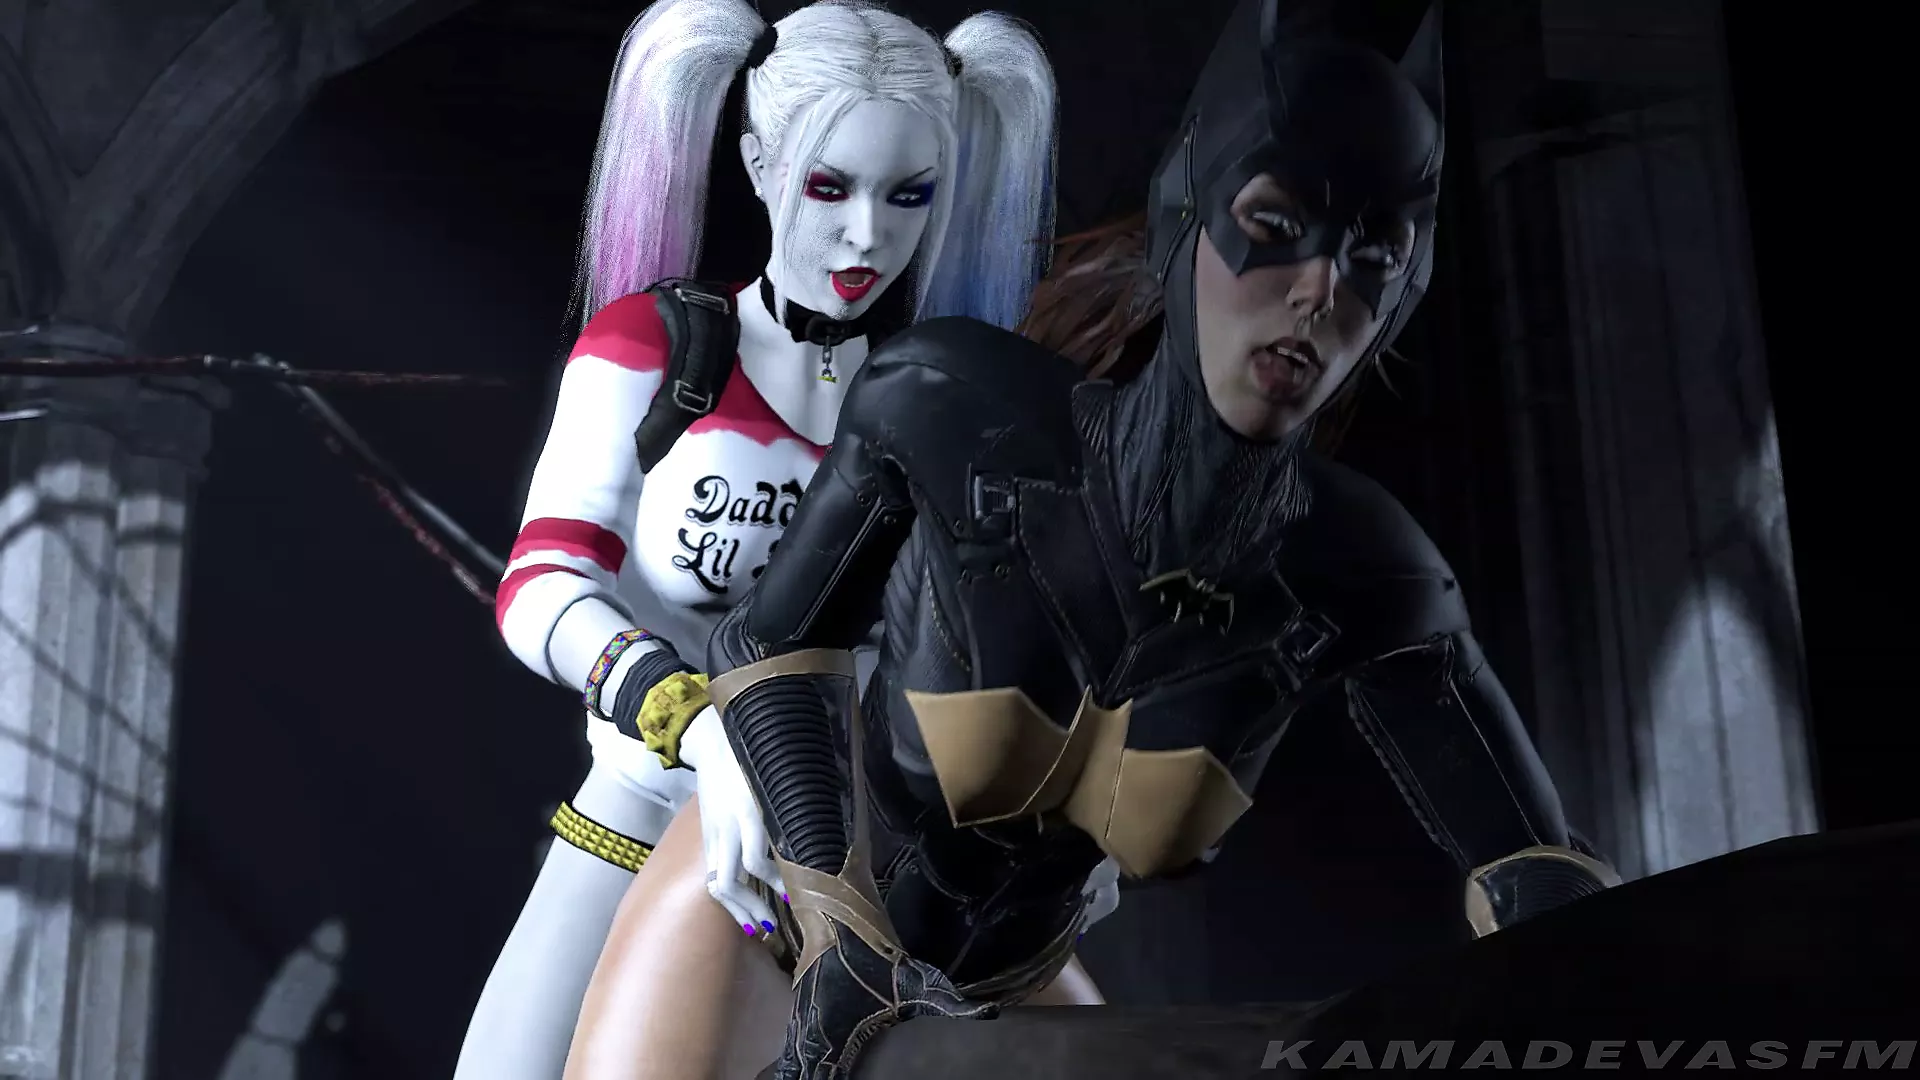 Batman Arkham Knight Harley Quinn Porn - Harley Quinn Batman Porn Asylum - Episode 3 watch online or download